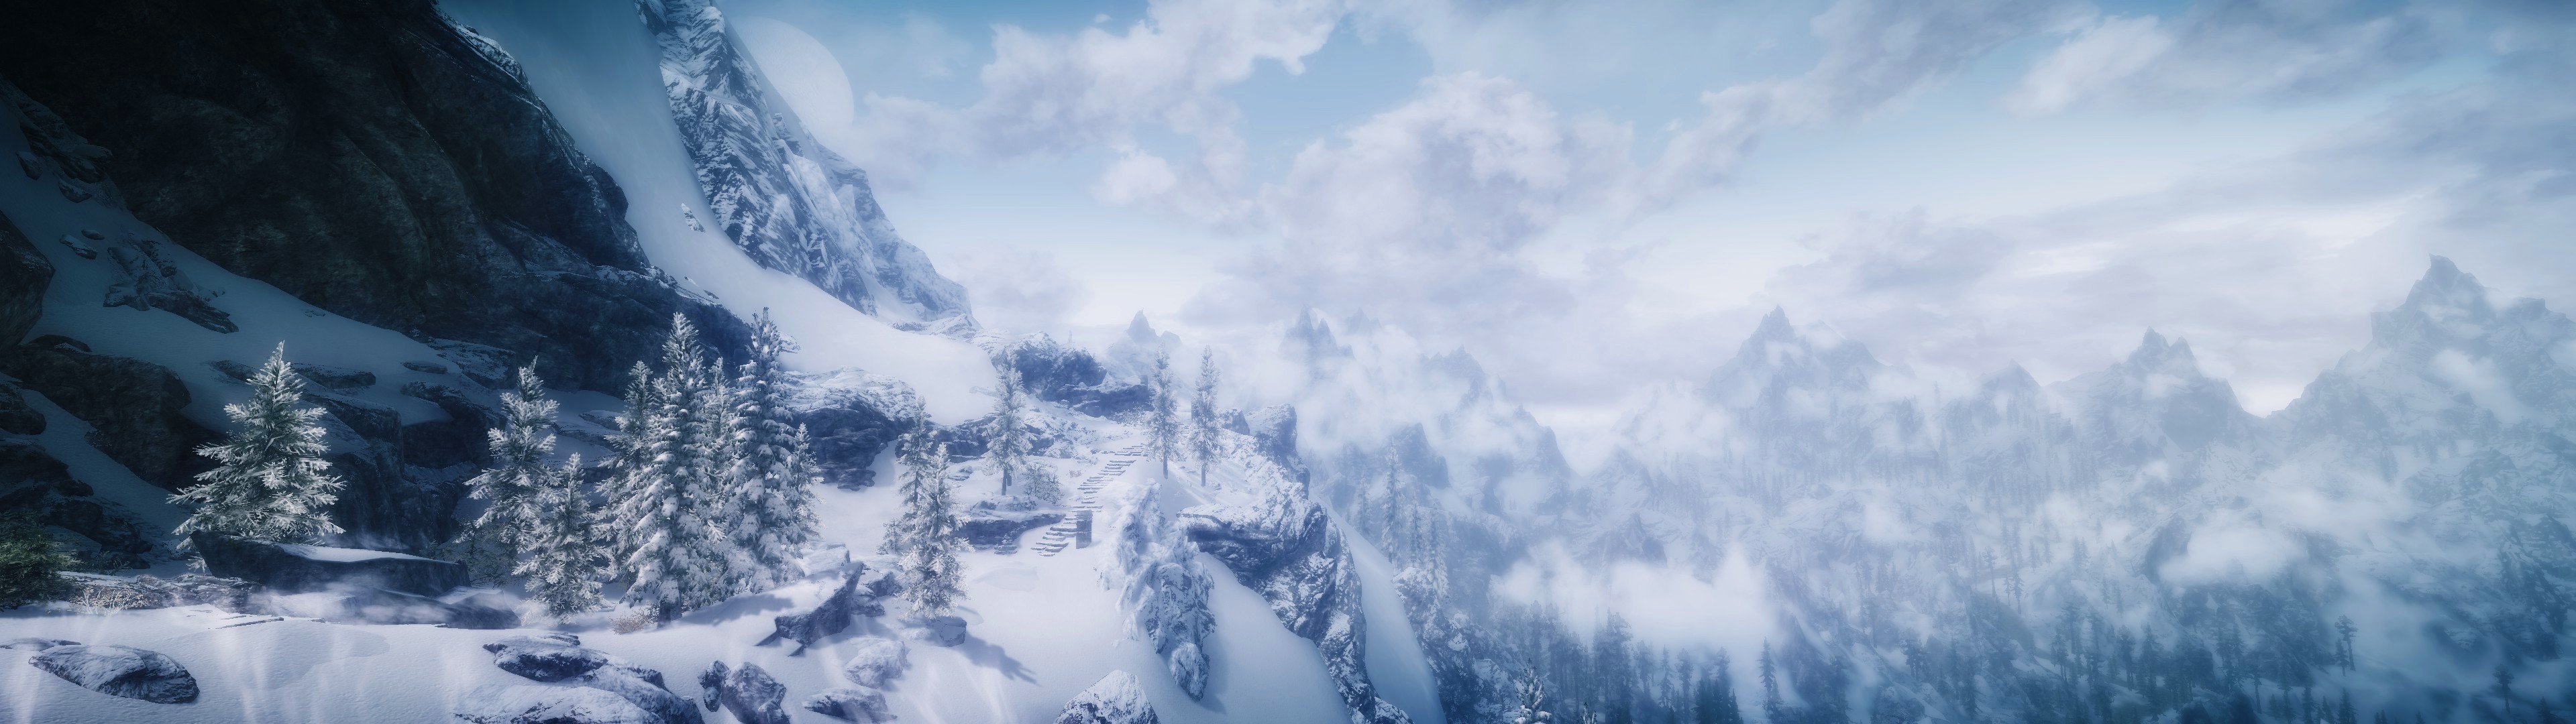 General 3840x1080 The Elder Scrolls V: Skyrim multiple display landscape snow mountains screen shot video games PC gaming RPG nature